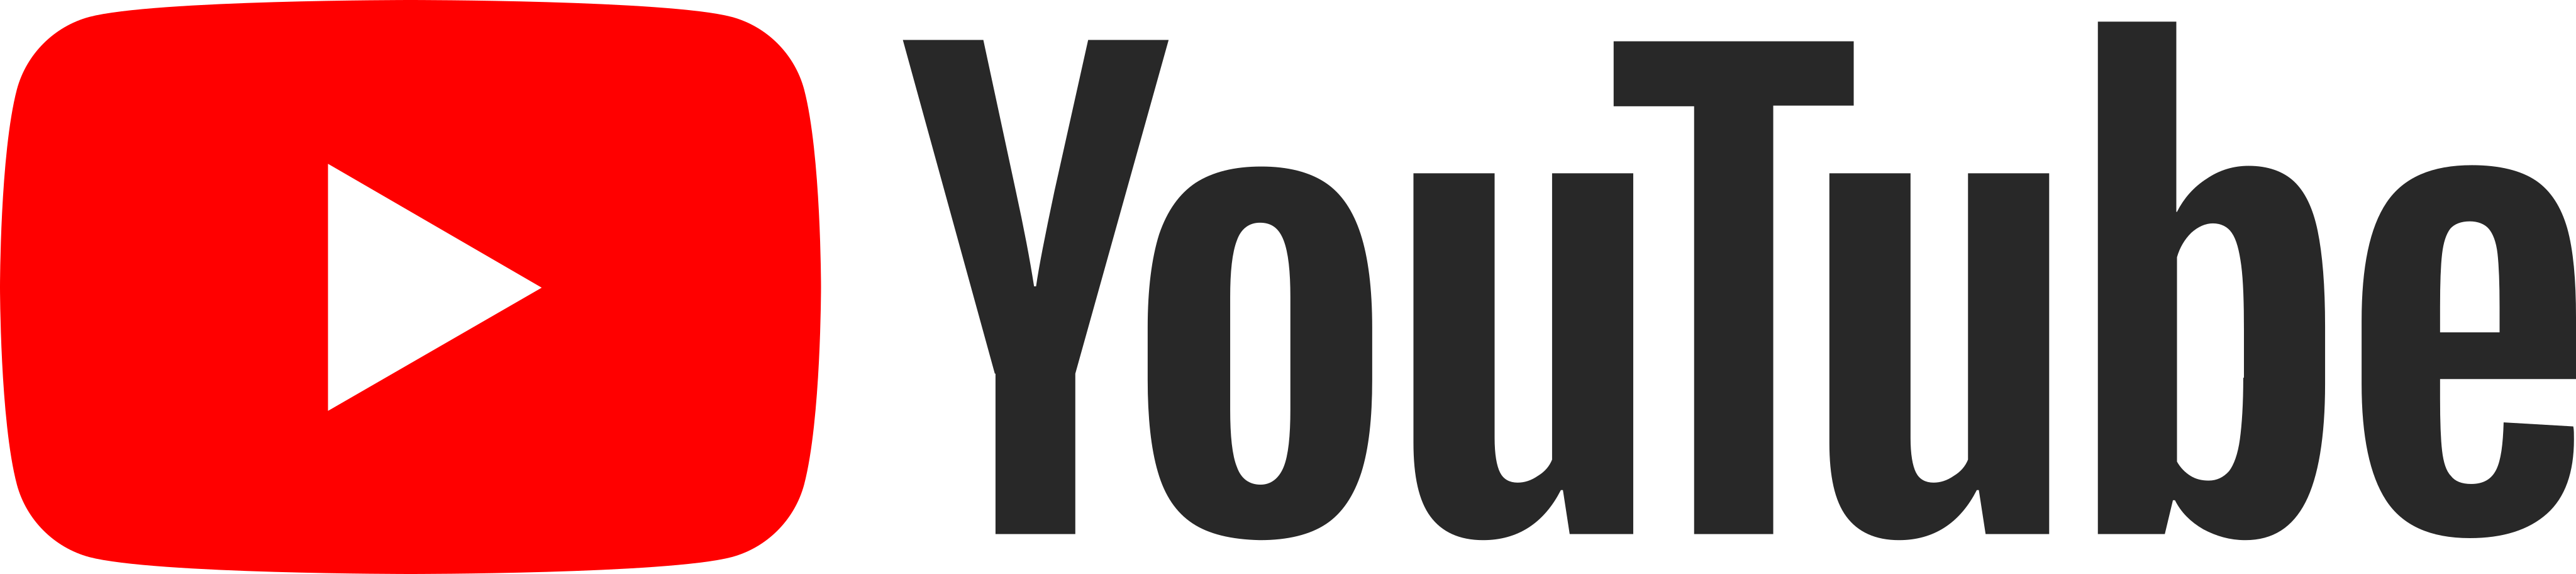 Logo De Youtube Transparente Gratis Png Png Play